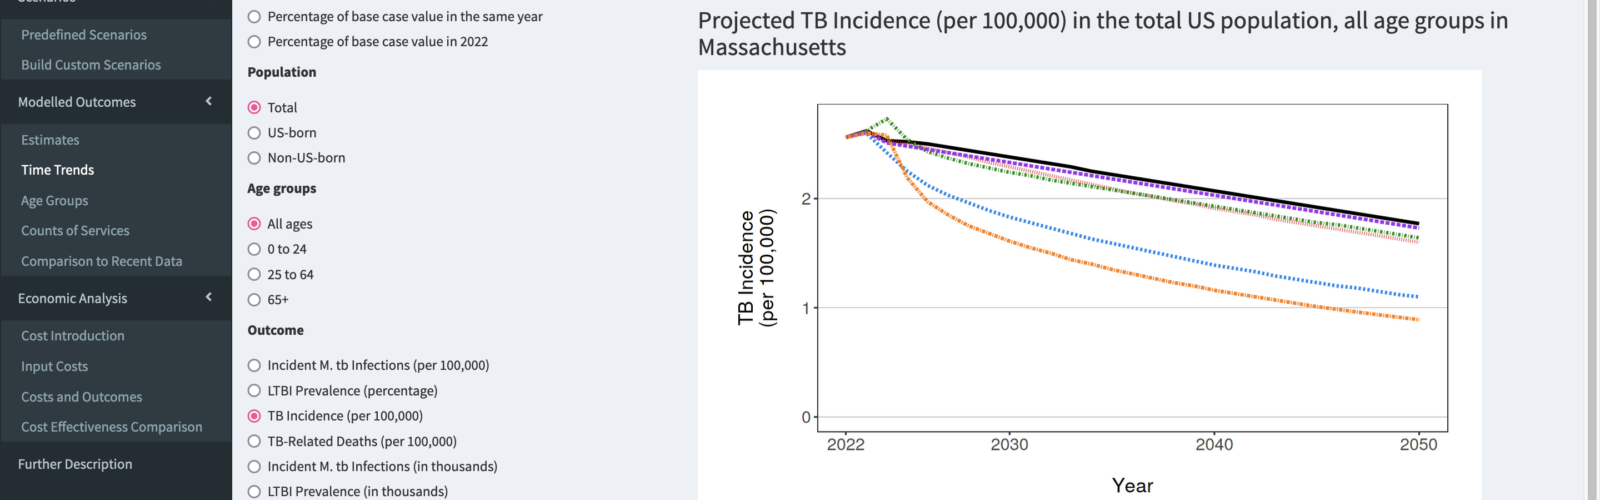 Tabby2: Interactive Webtool Providing Tuberculosis Projections